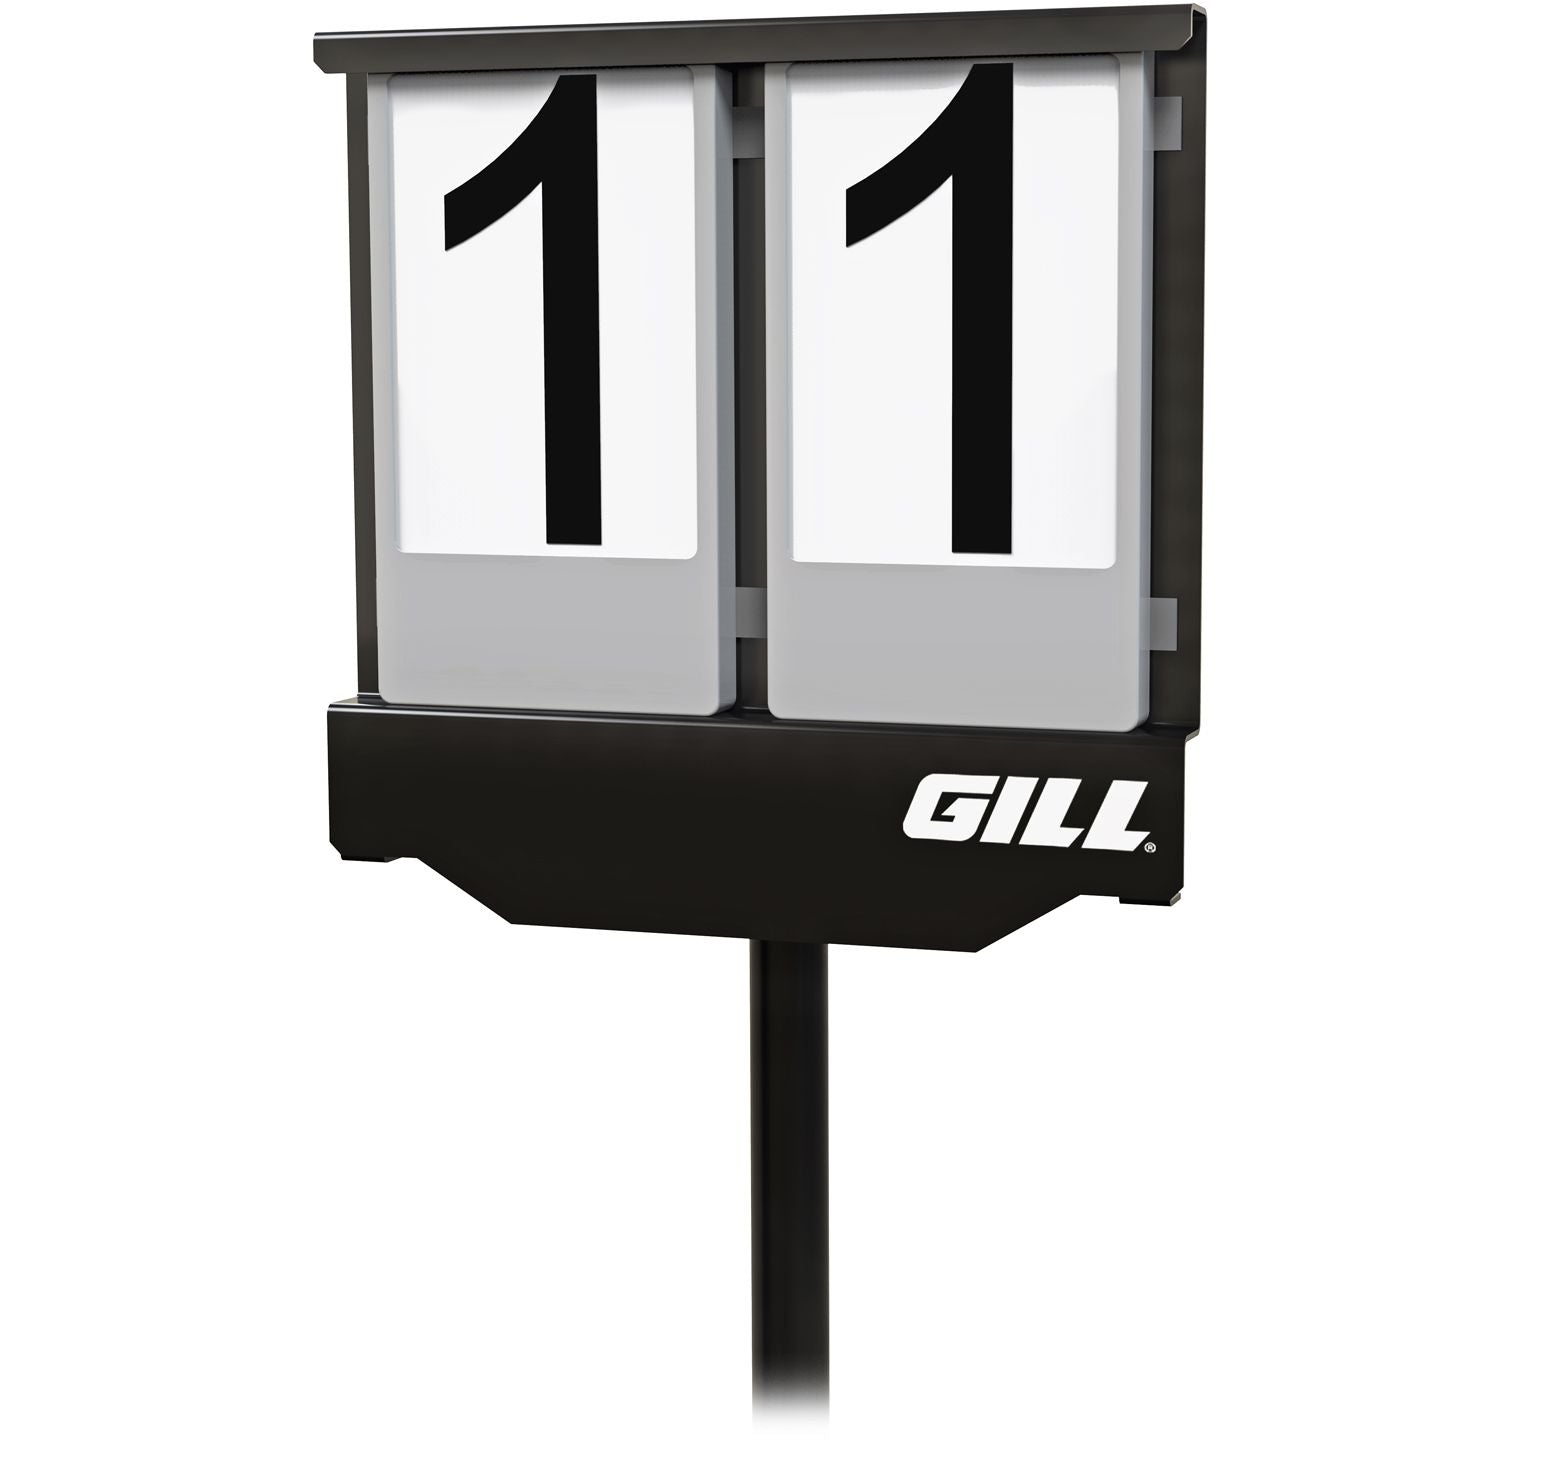 Gill Athletics 2 Digit Pole Vault Display